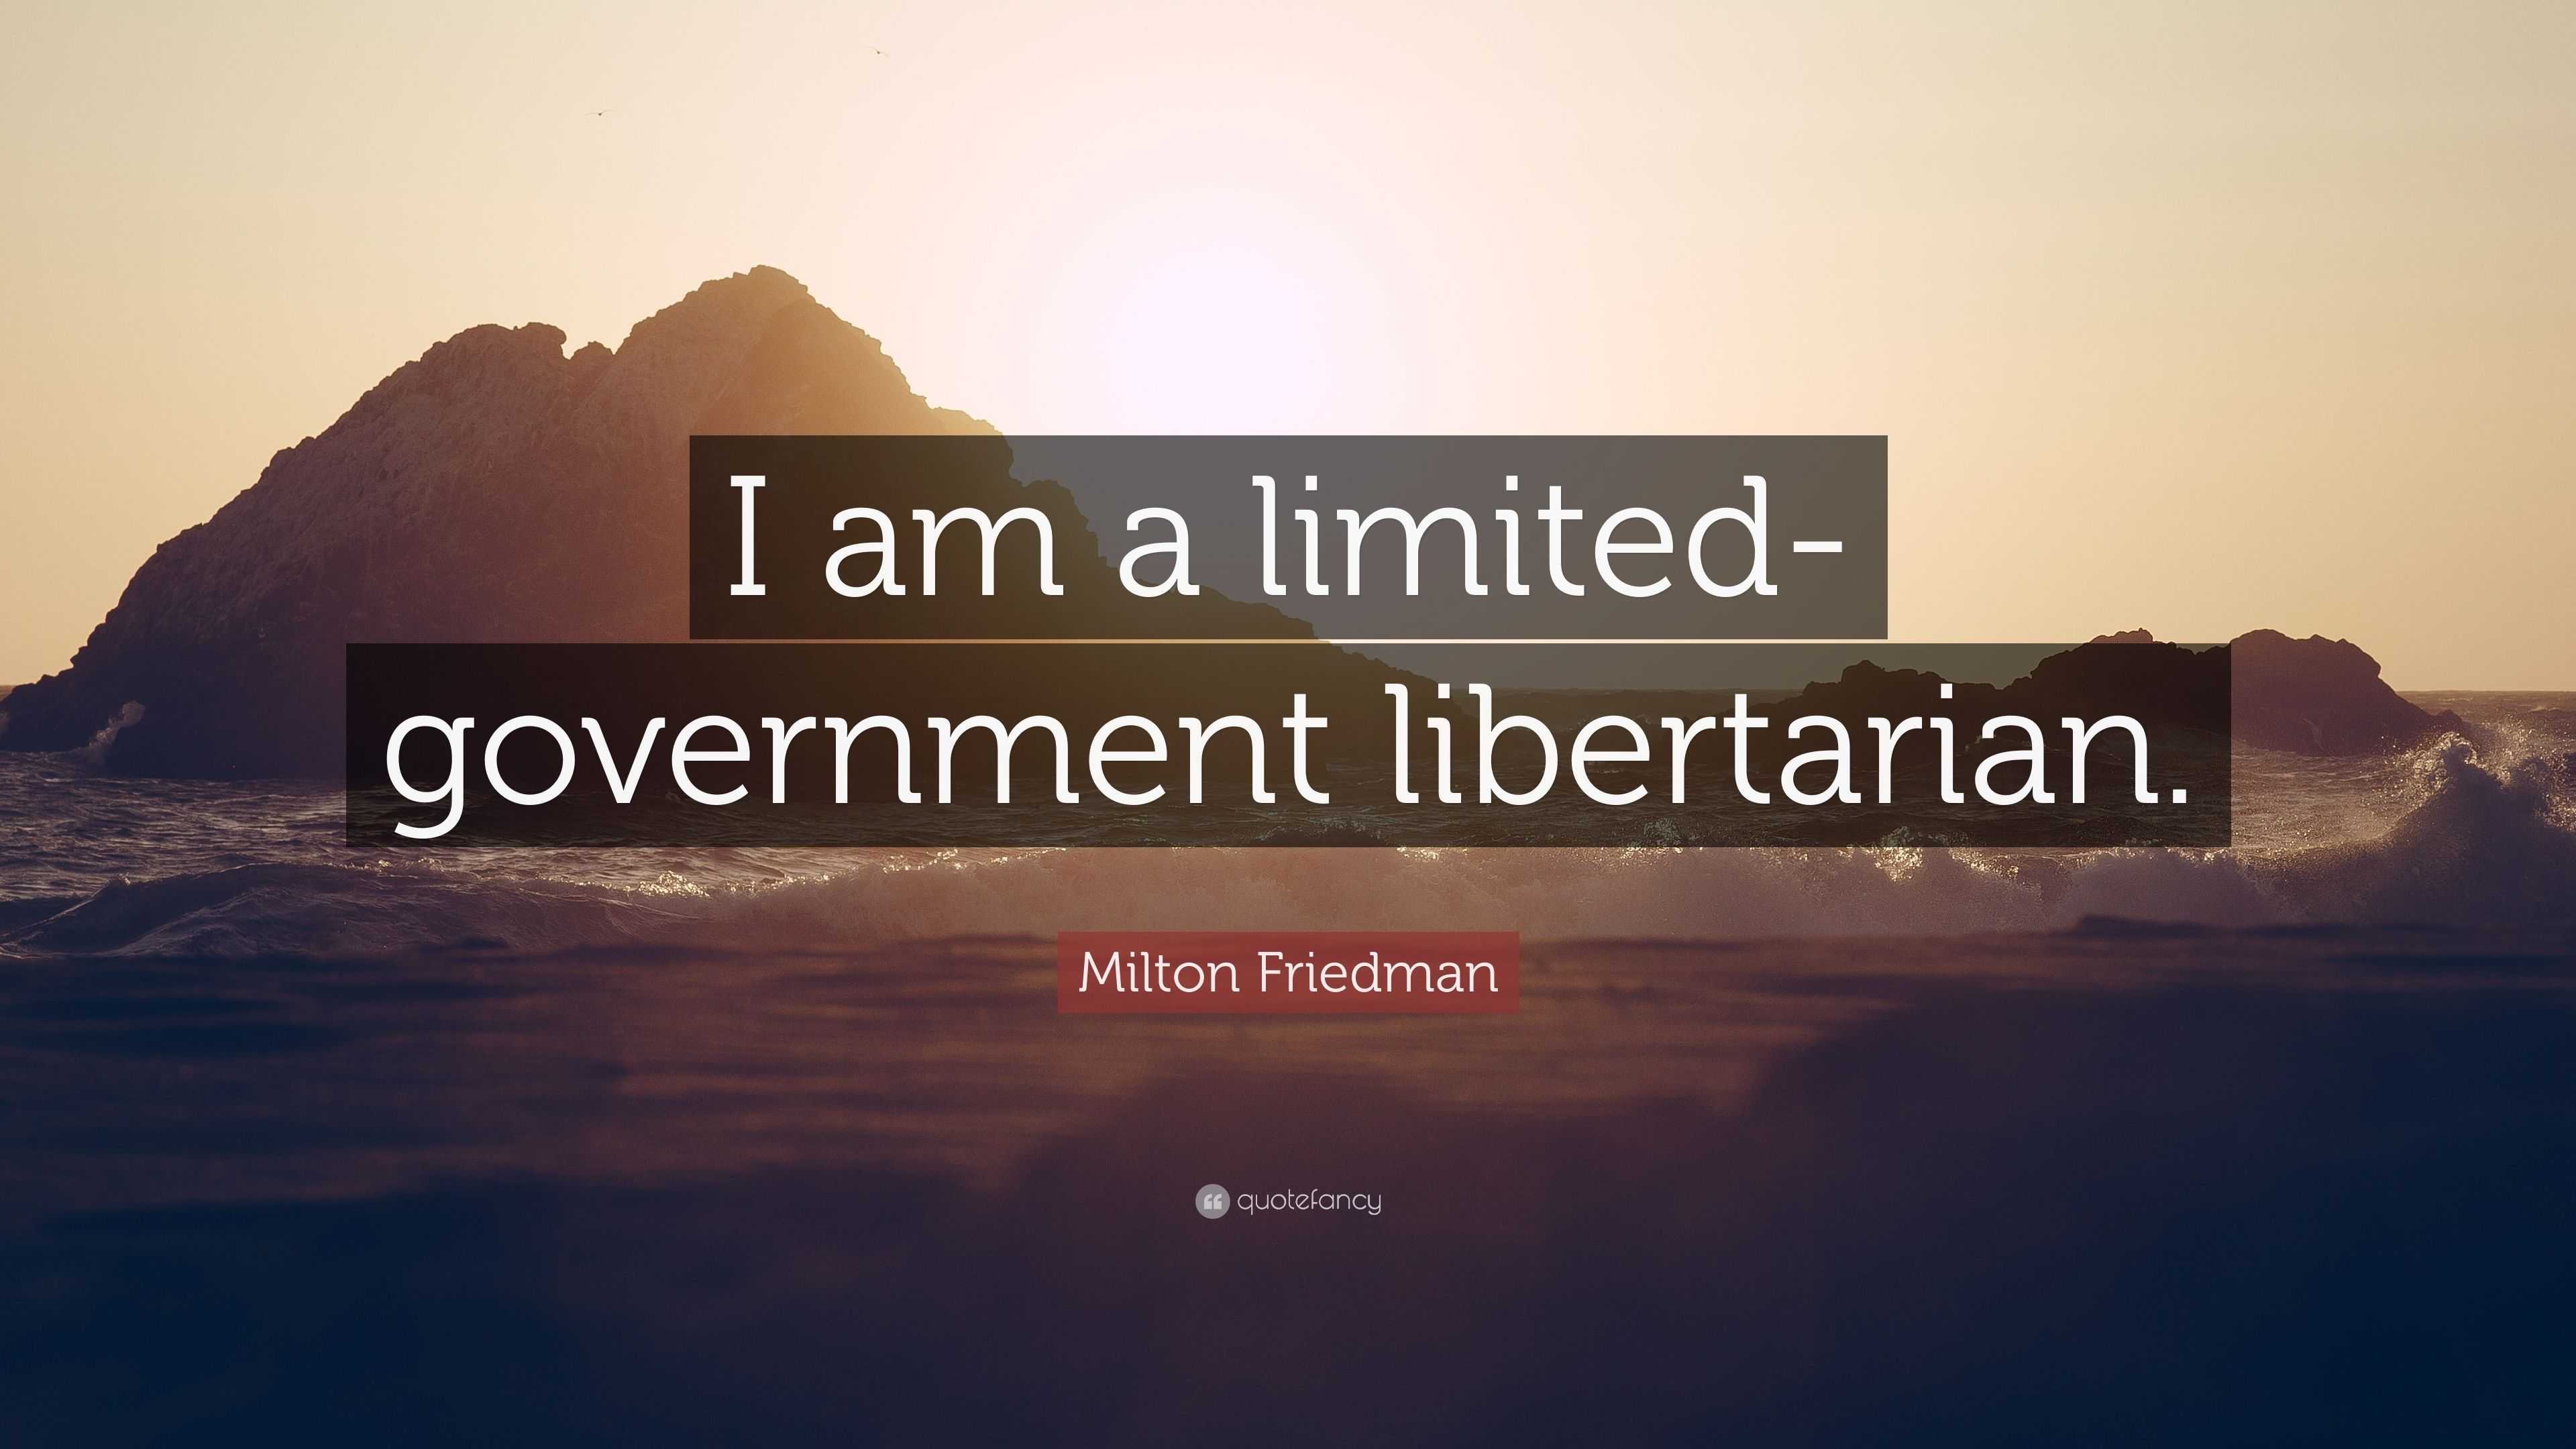 Milton Friedman Quote “I am a limitedgovernment libertarian.”